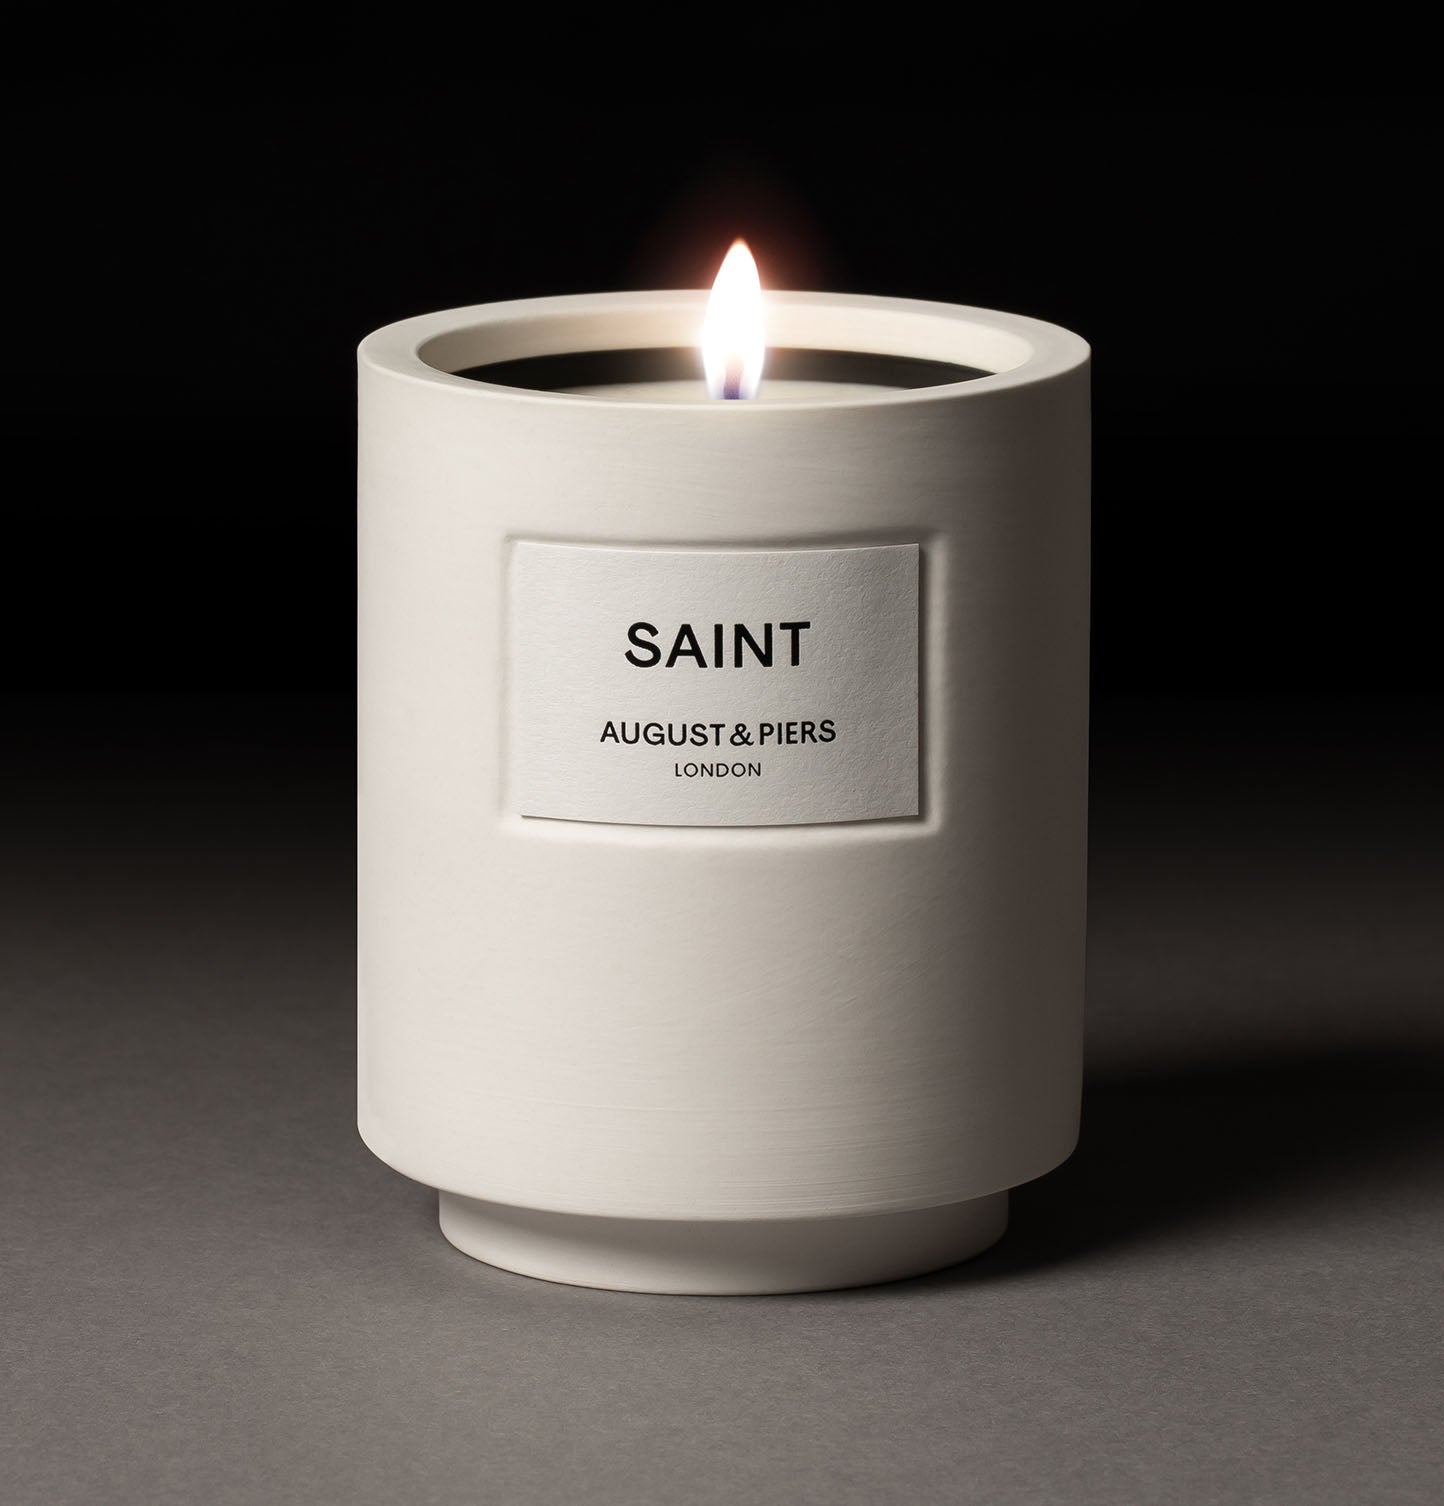 Saint Candle